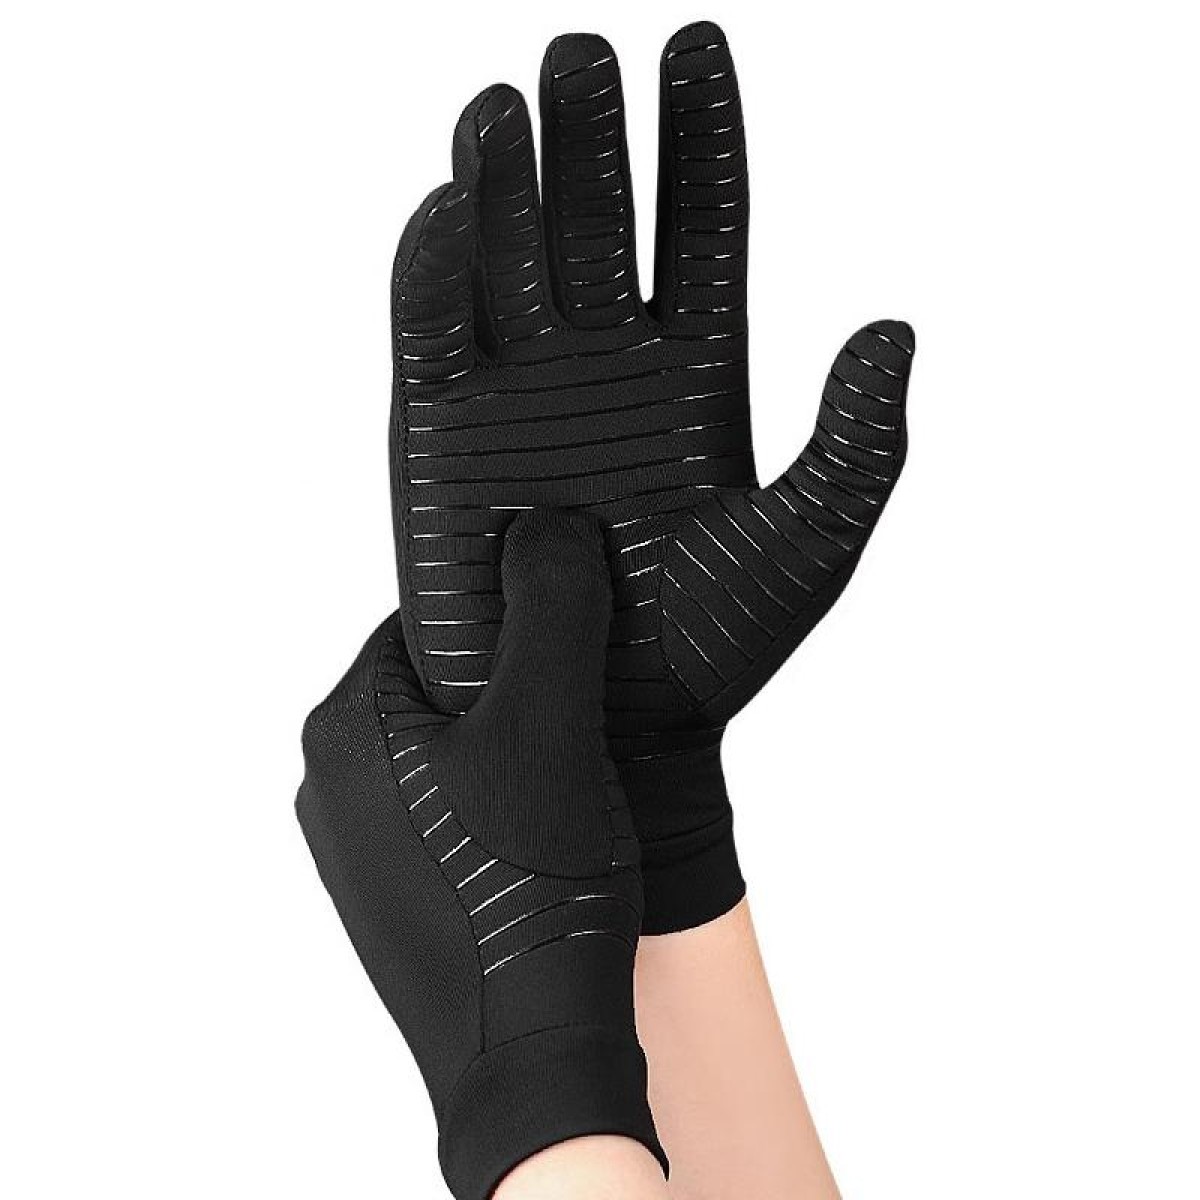 Copper Fiber Pressure Sports Fitness Anti-Slip Gloves, Size: M